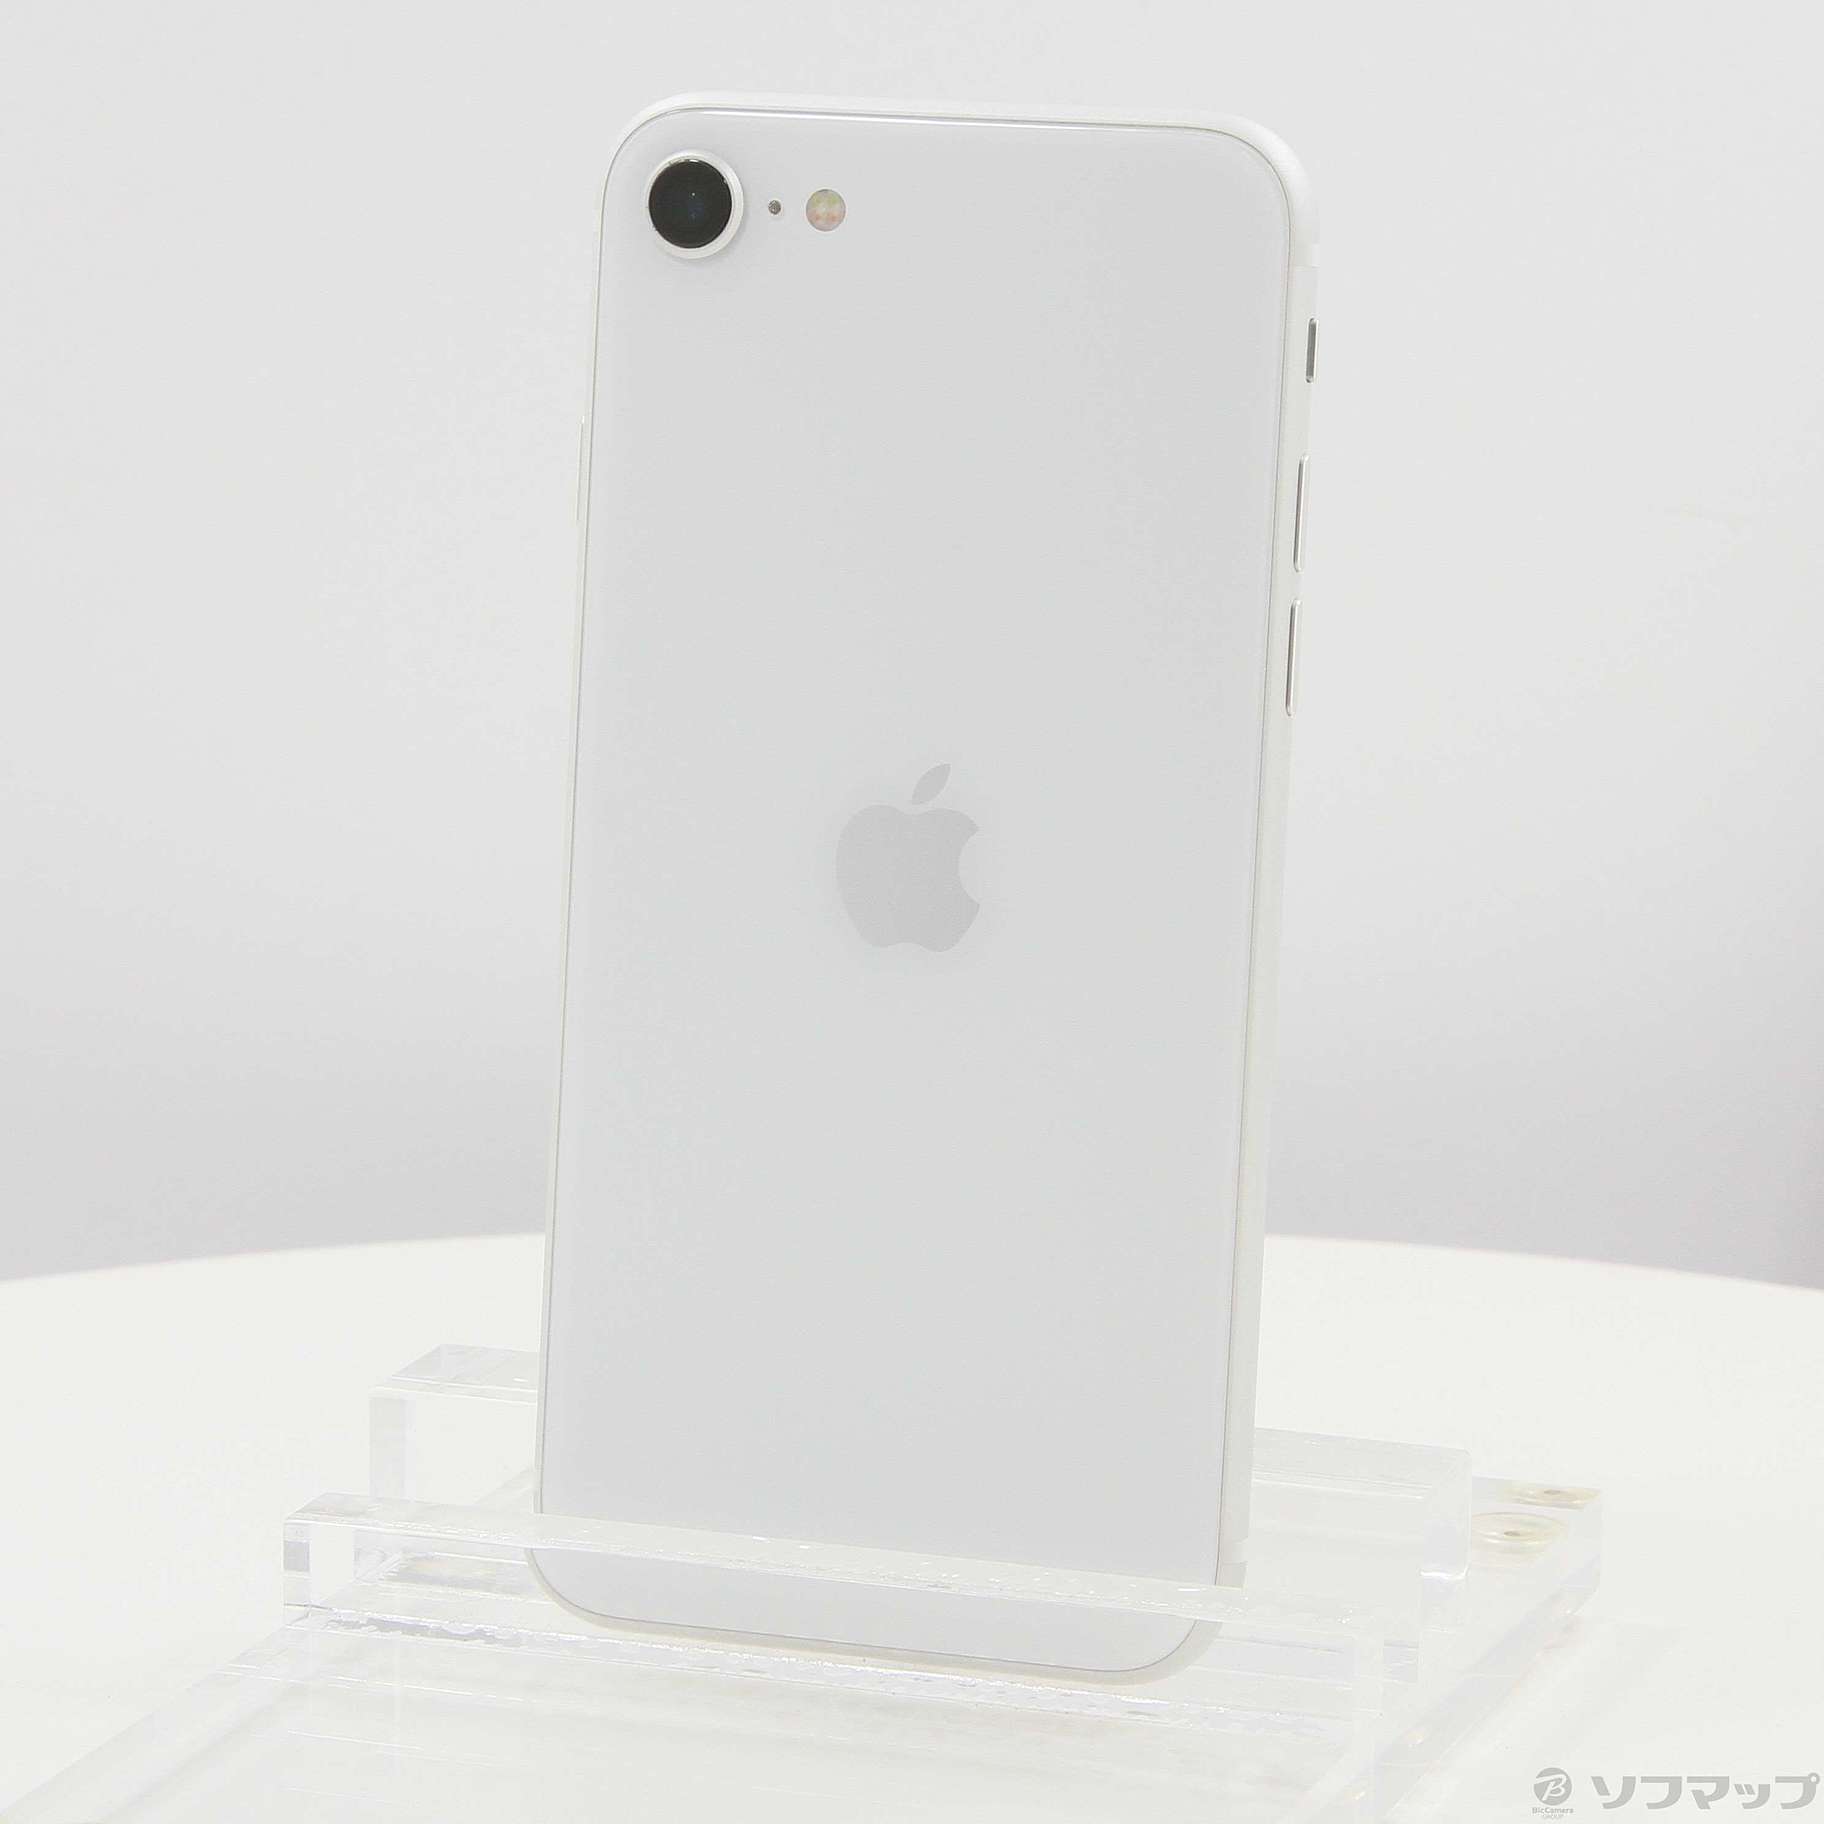 Apple iPhone SE 64GB 第2世代 ホワイト MHGQ3J/A